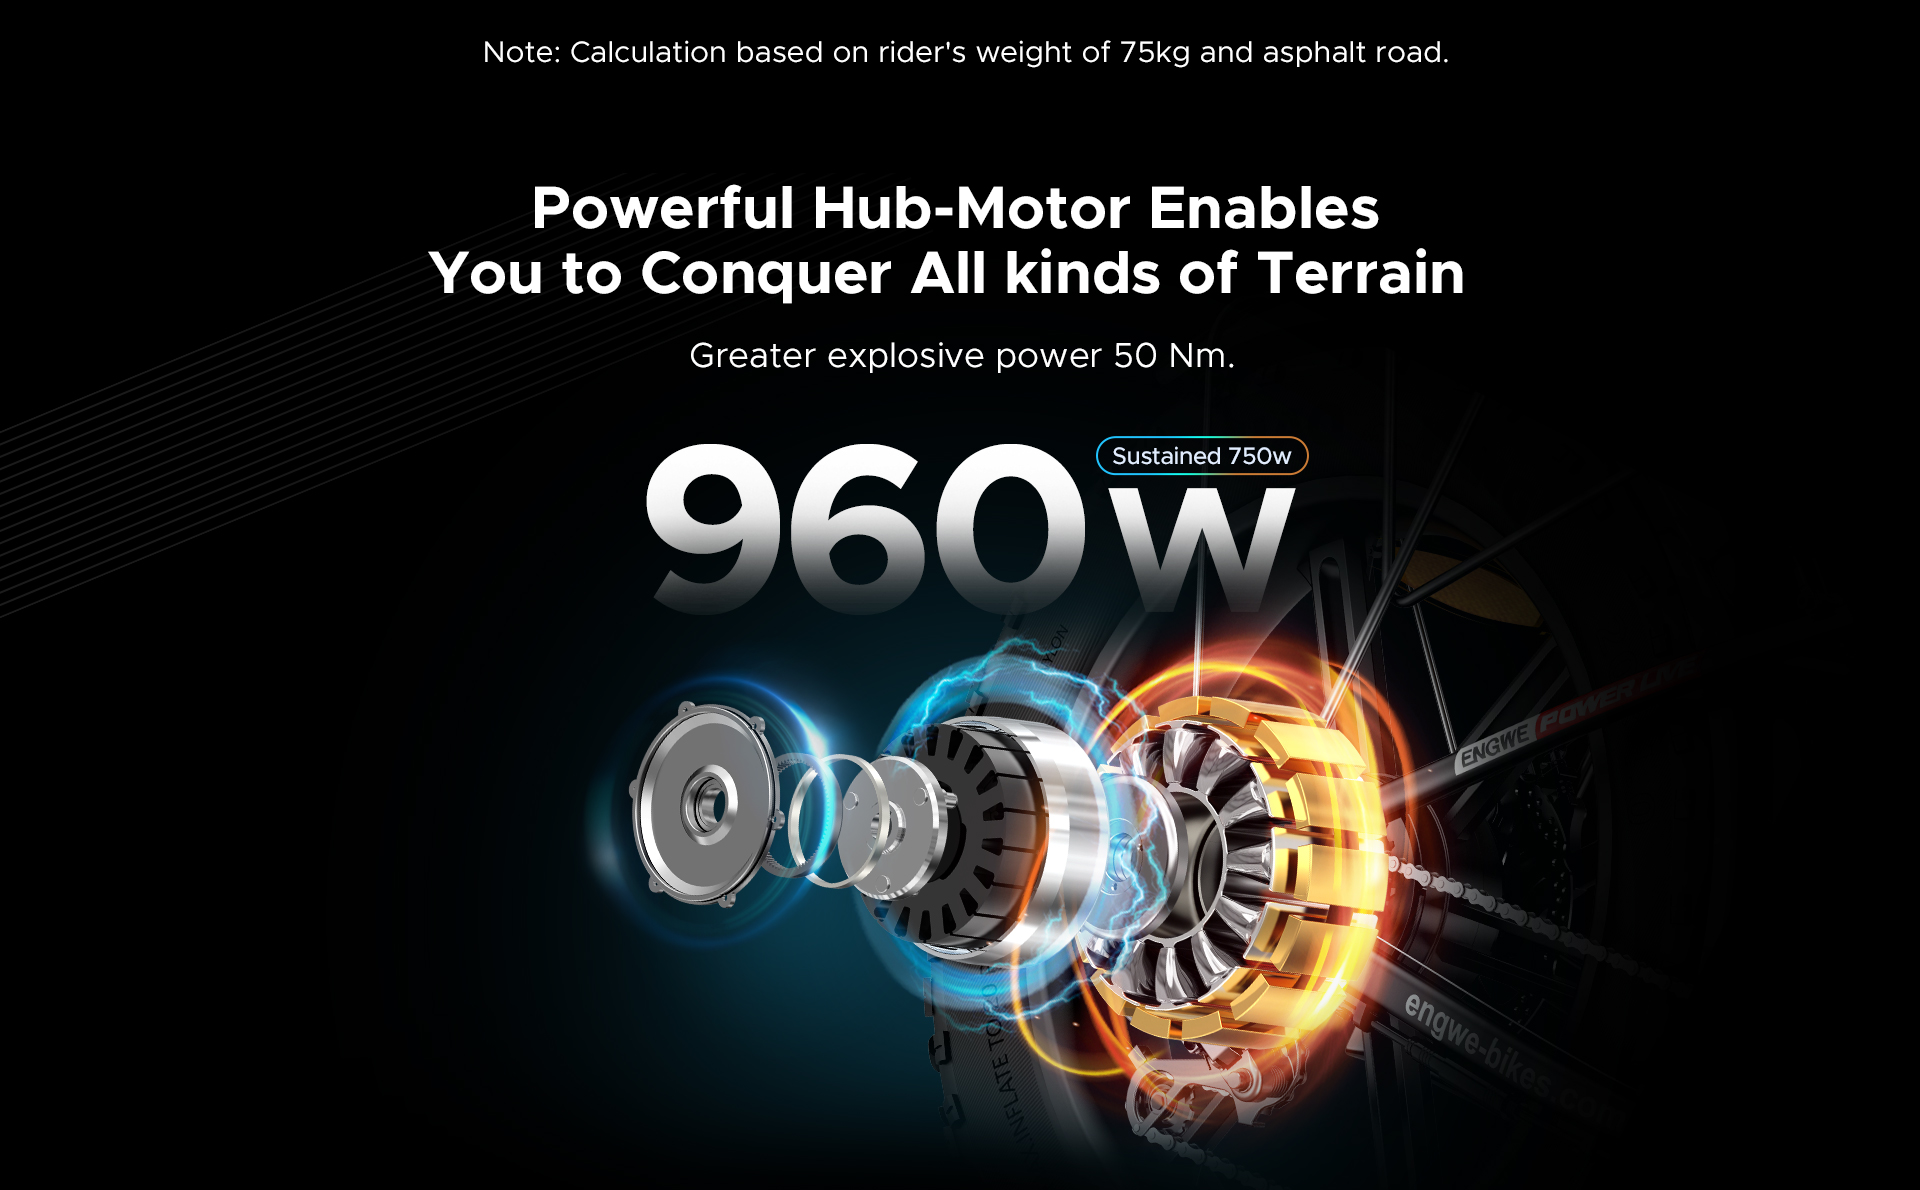 Engwe EP-2 Pro 20*4.0 Fat Tire Foldable Electric Bike - 750W Motor & 48V 13Ah Battery